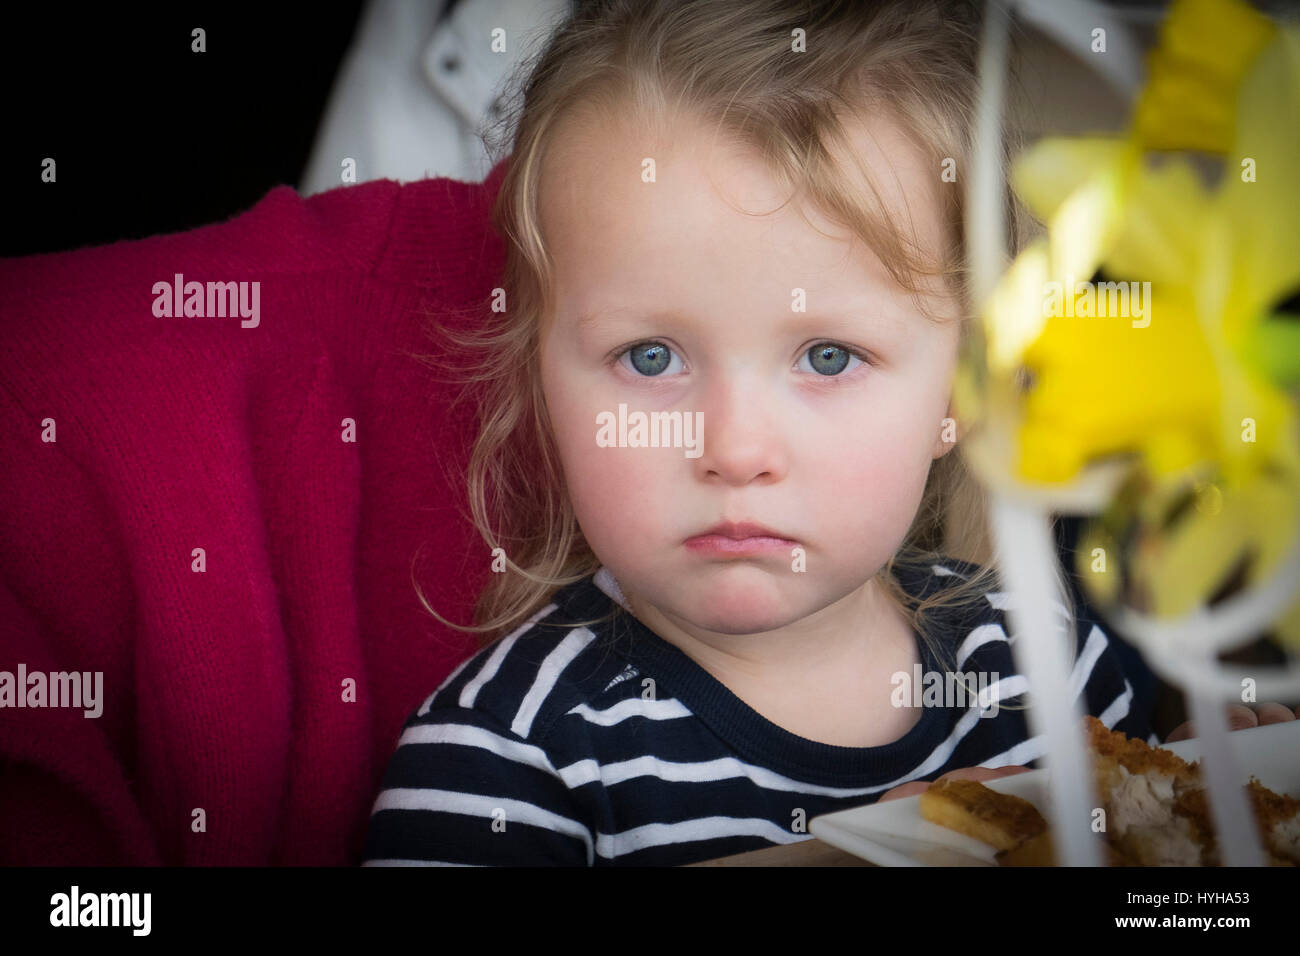 Child Girl Upset Tearful Pout Pouting Direct Gaze Stock Photo